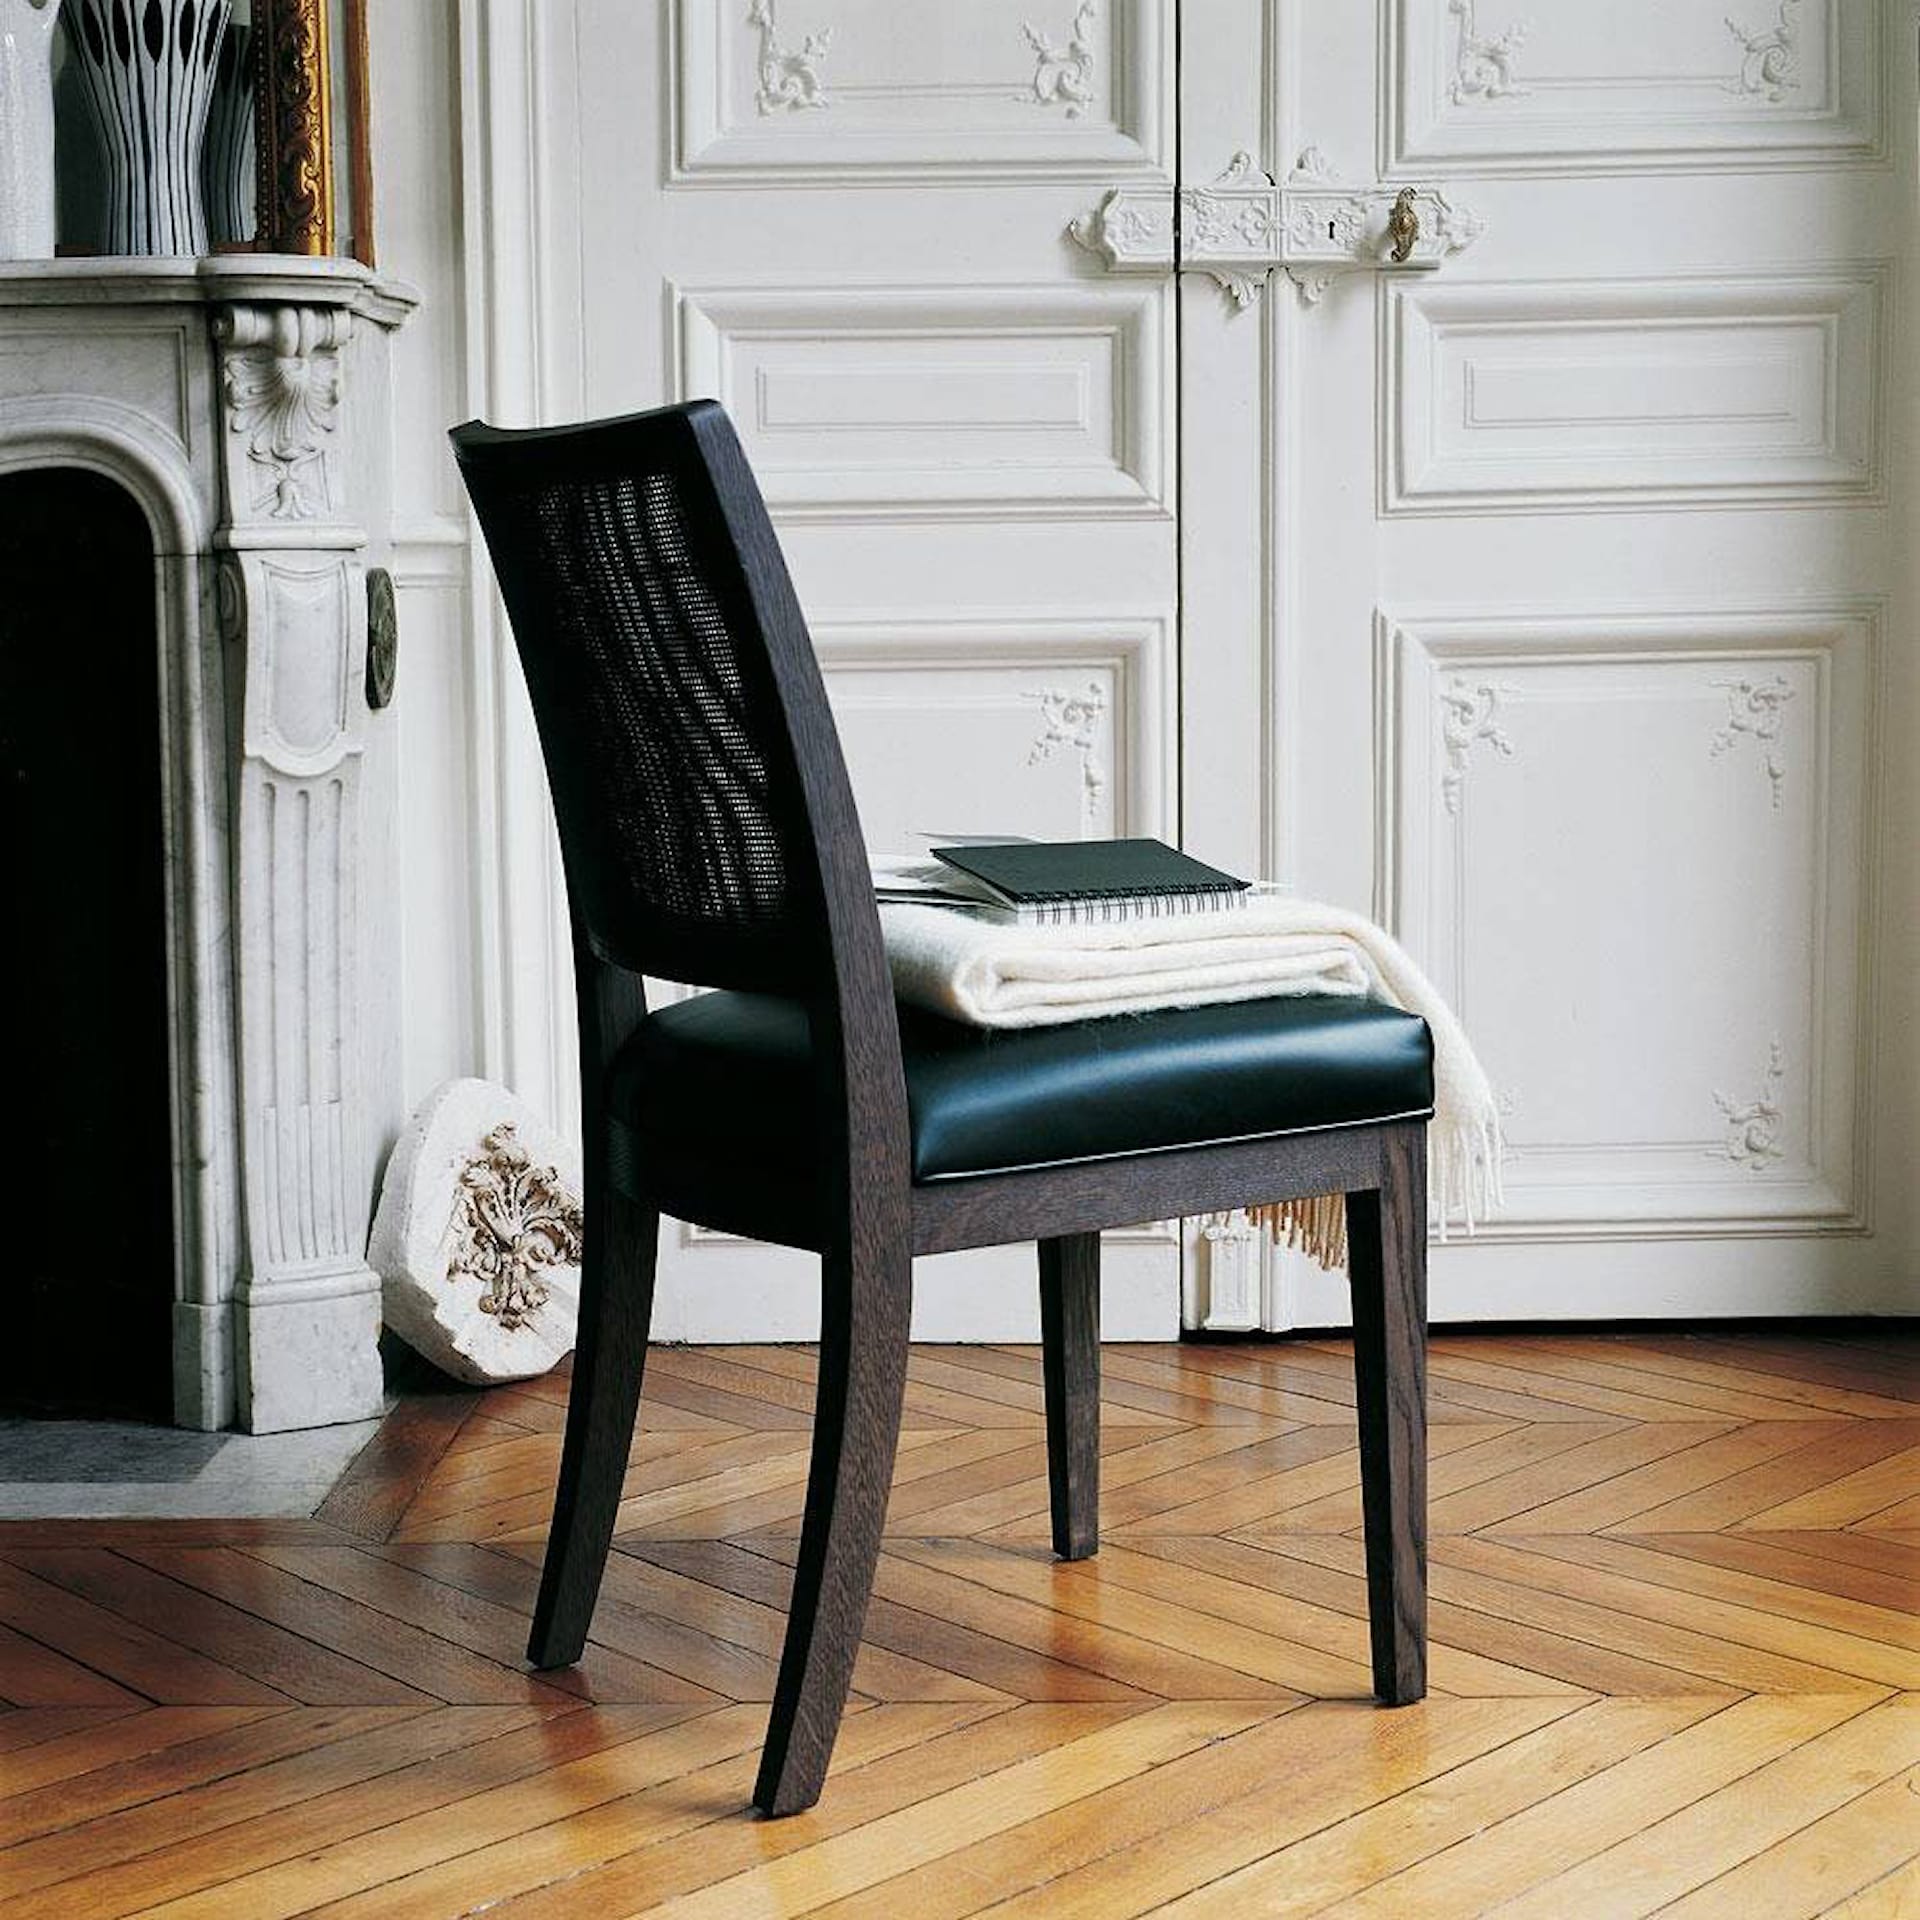 Calipso Chair - Maxalto - Antonio Citterio - NO GA